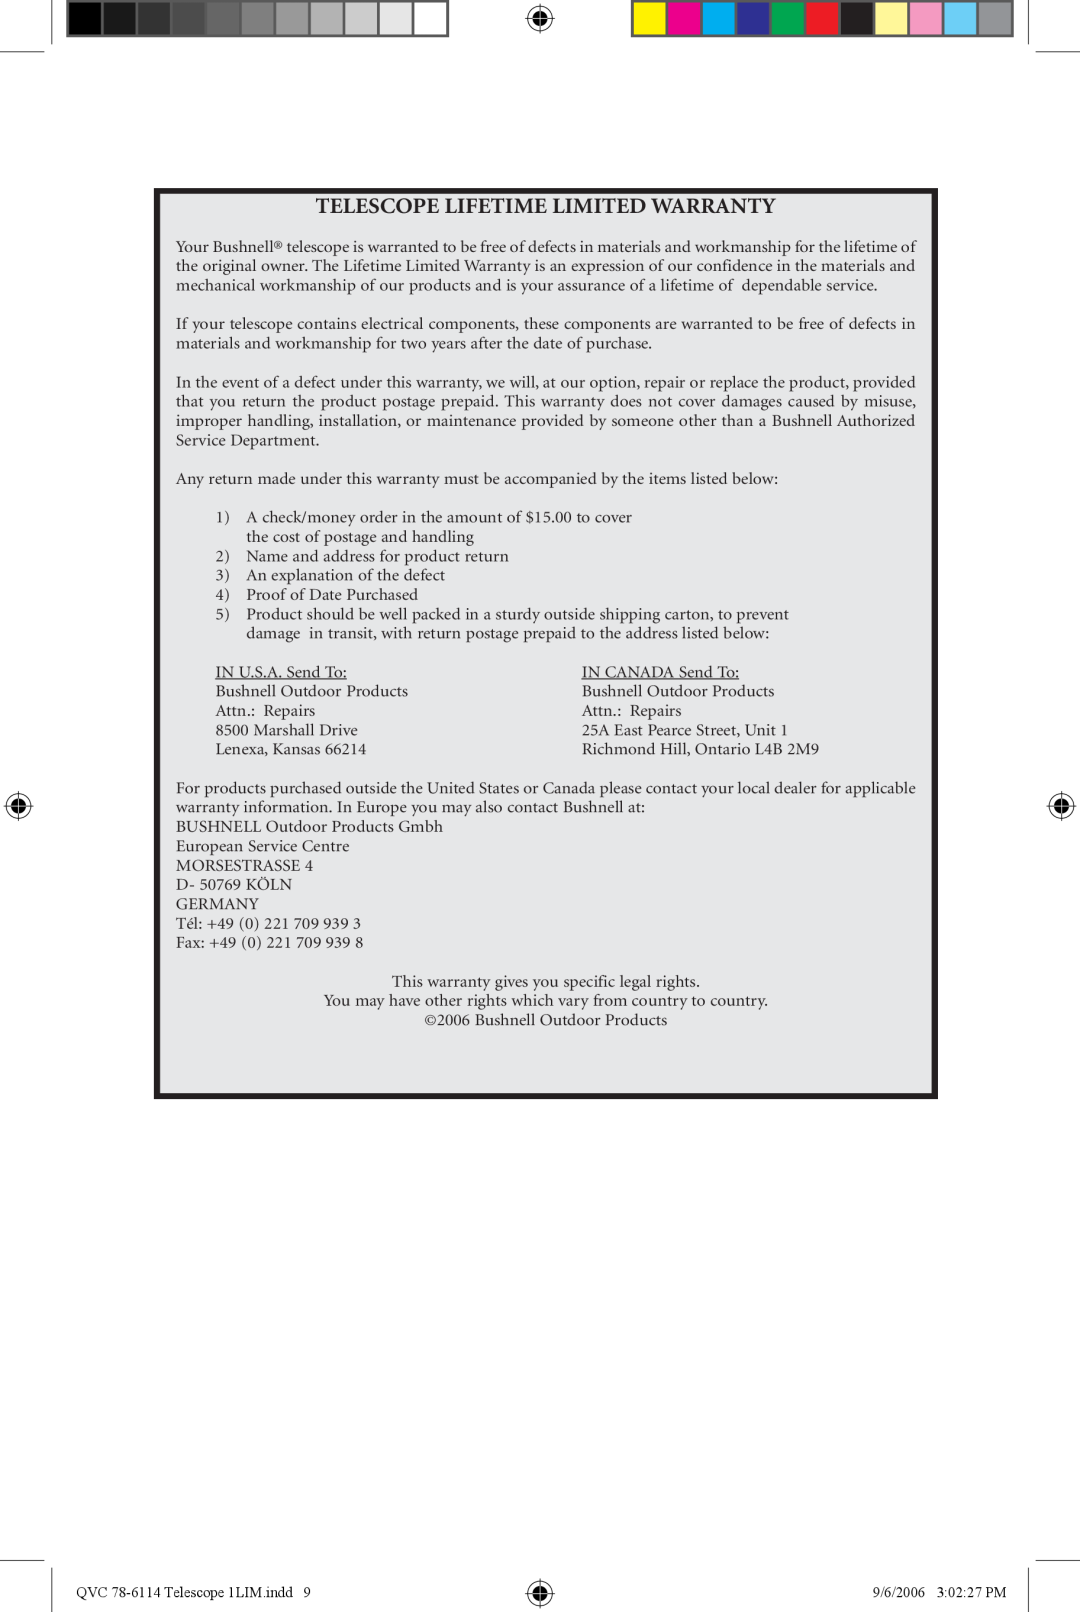 Bushnell 78-6114 instruction manual Telescope Lifetime Limited Warranty 